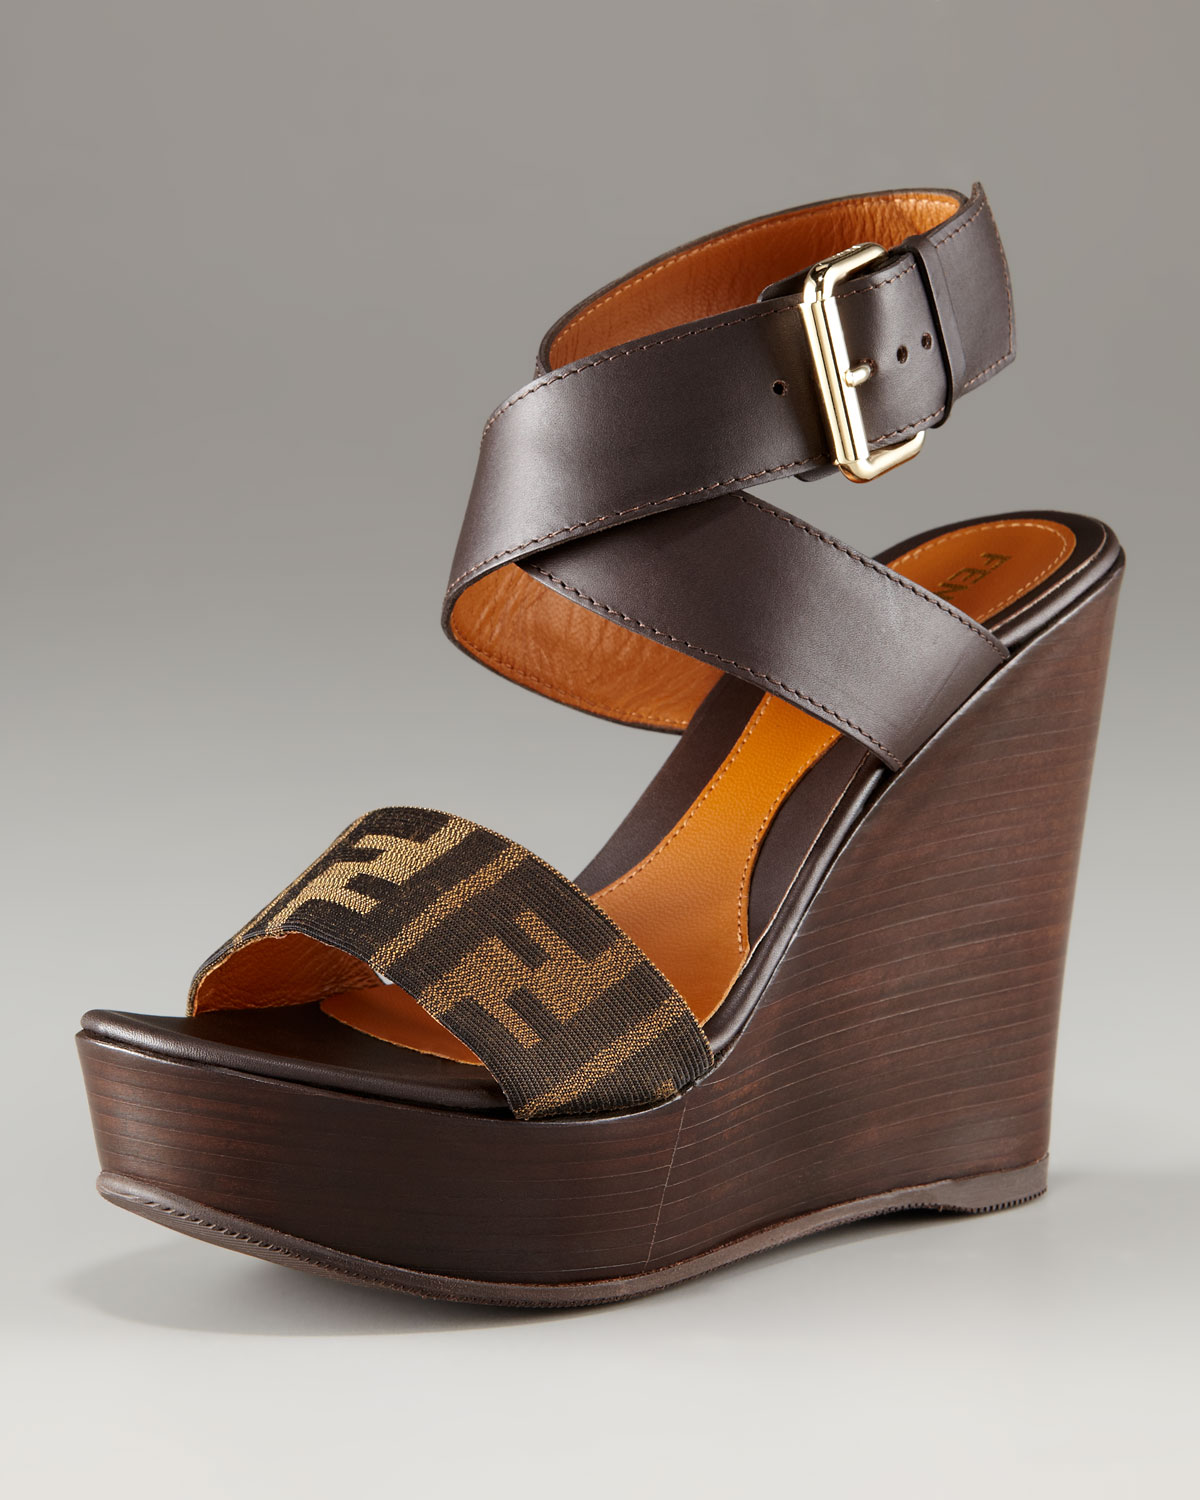 Fendi Zucca Wedge Sandal in Brown - Lyst